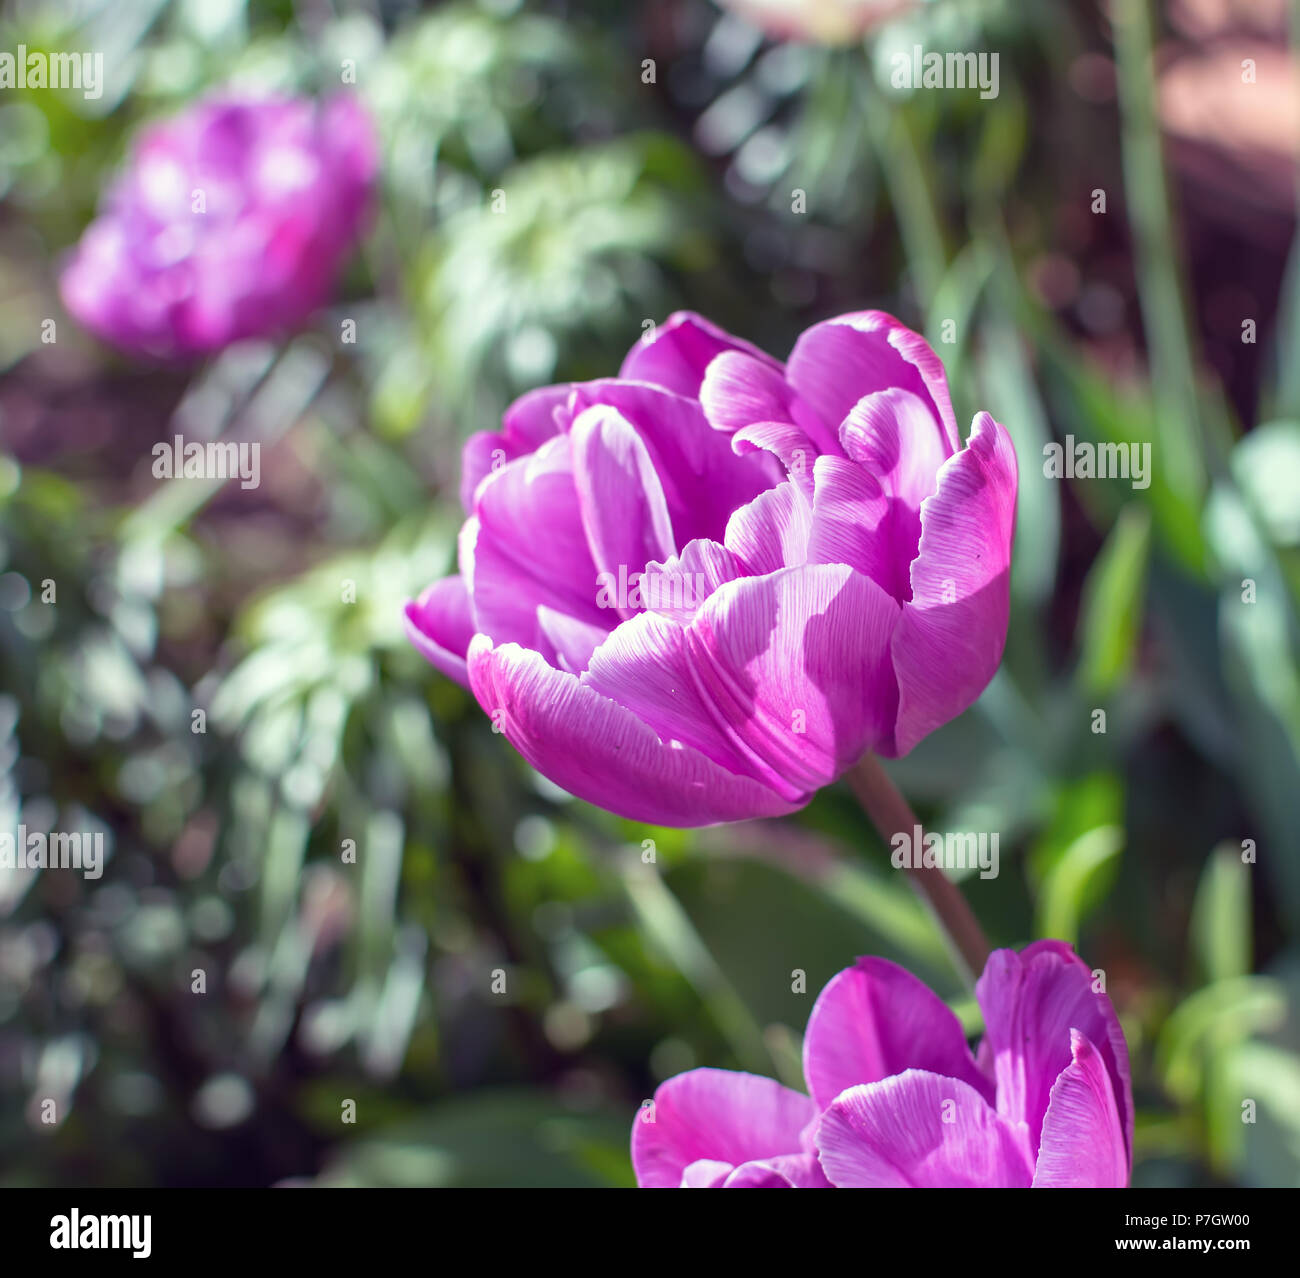 Magnificent purple Double Late Tulips (peony flowered tulips) genus tulipa hybrid species under morning spring sun. Stock Photo